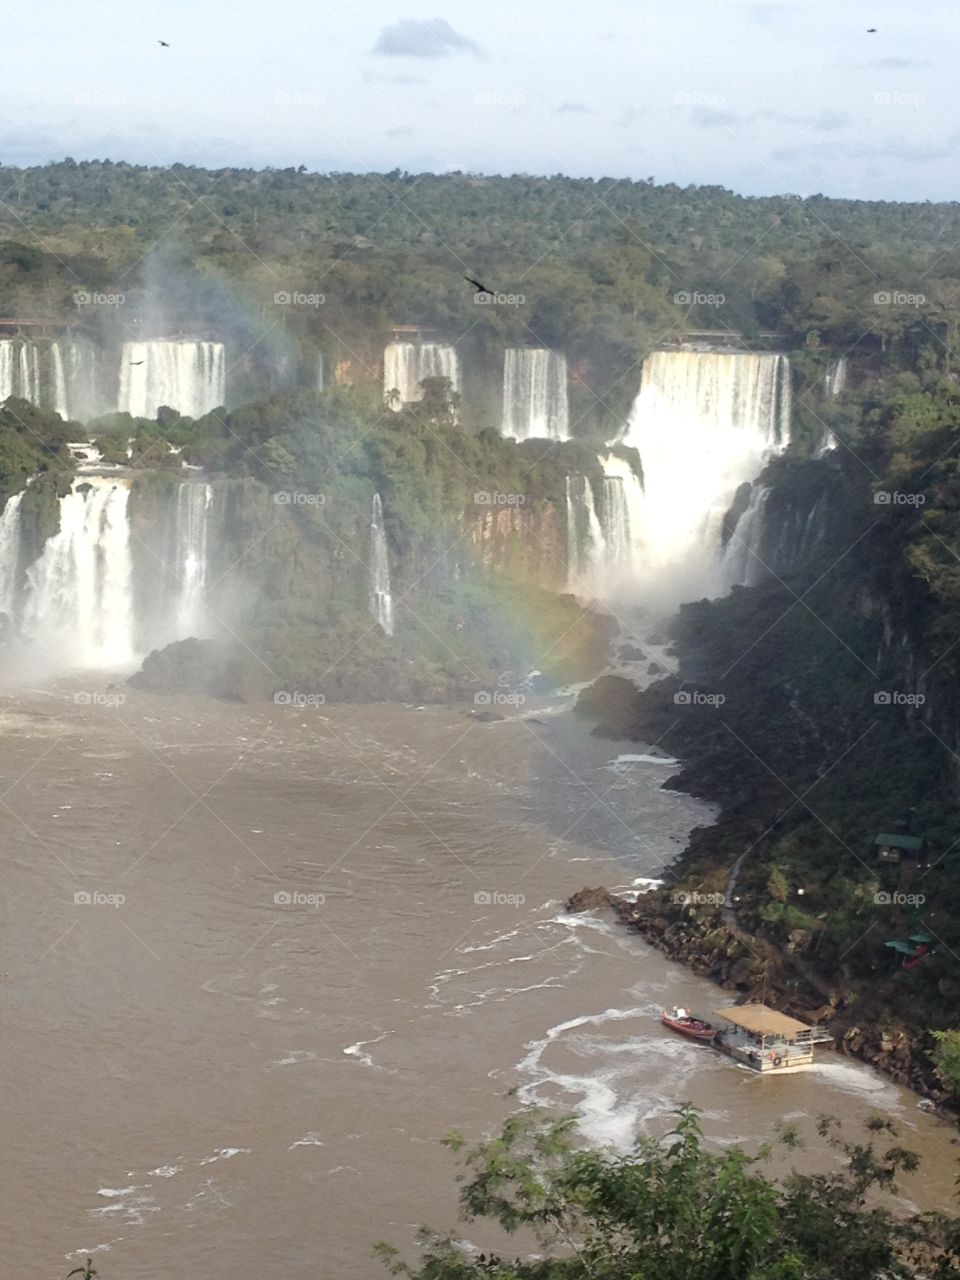 Rainbow at the Cataratas do Iguaçu - Paraná - Brasil 